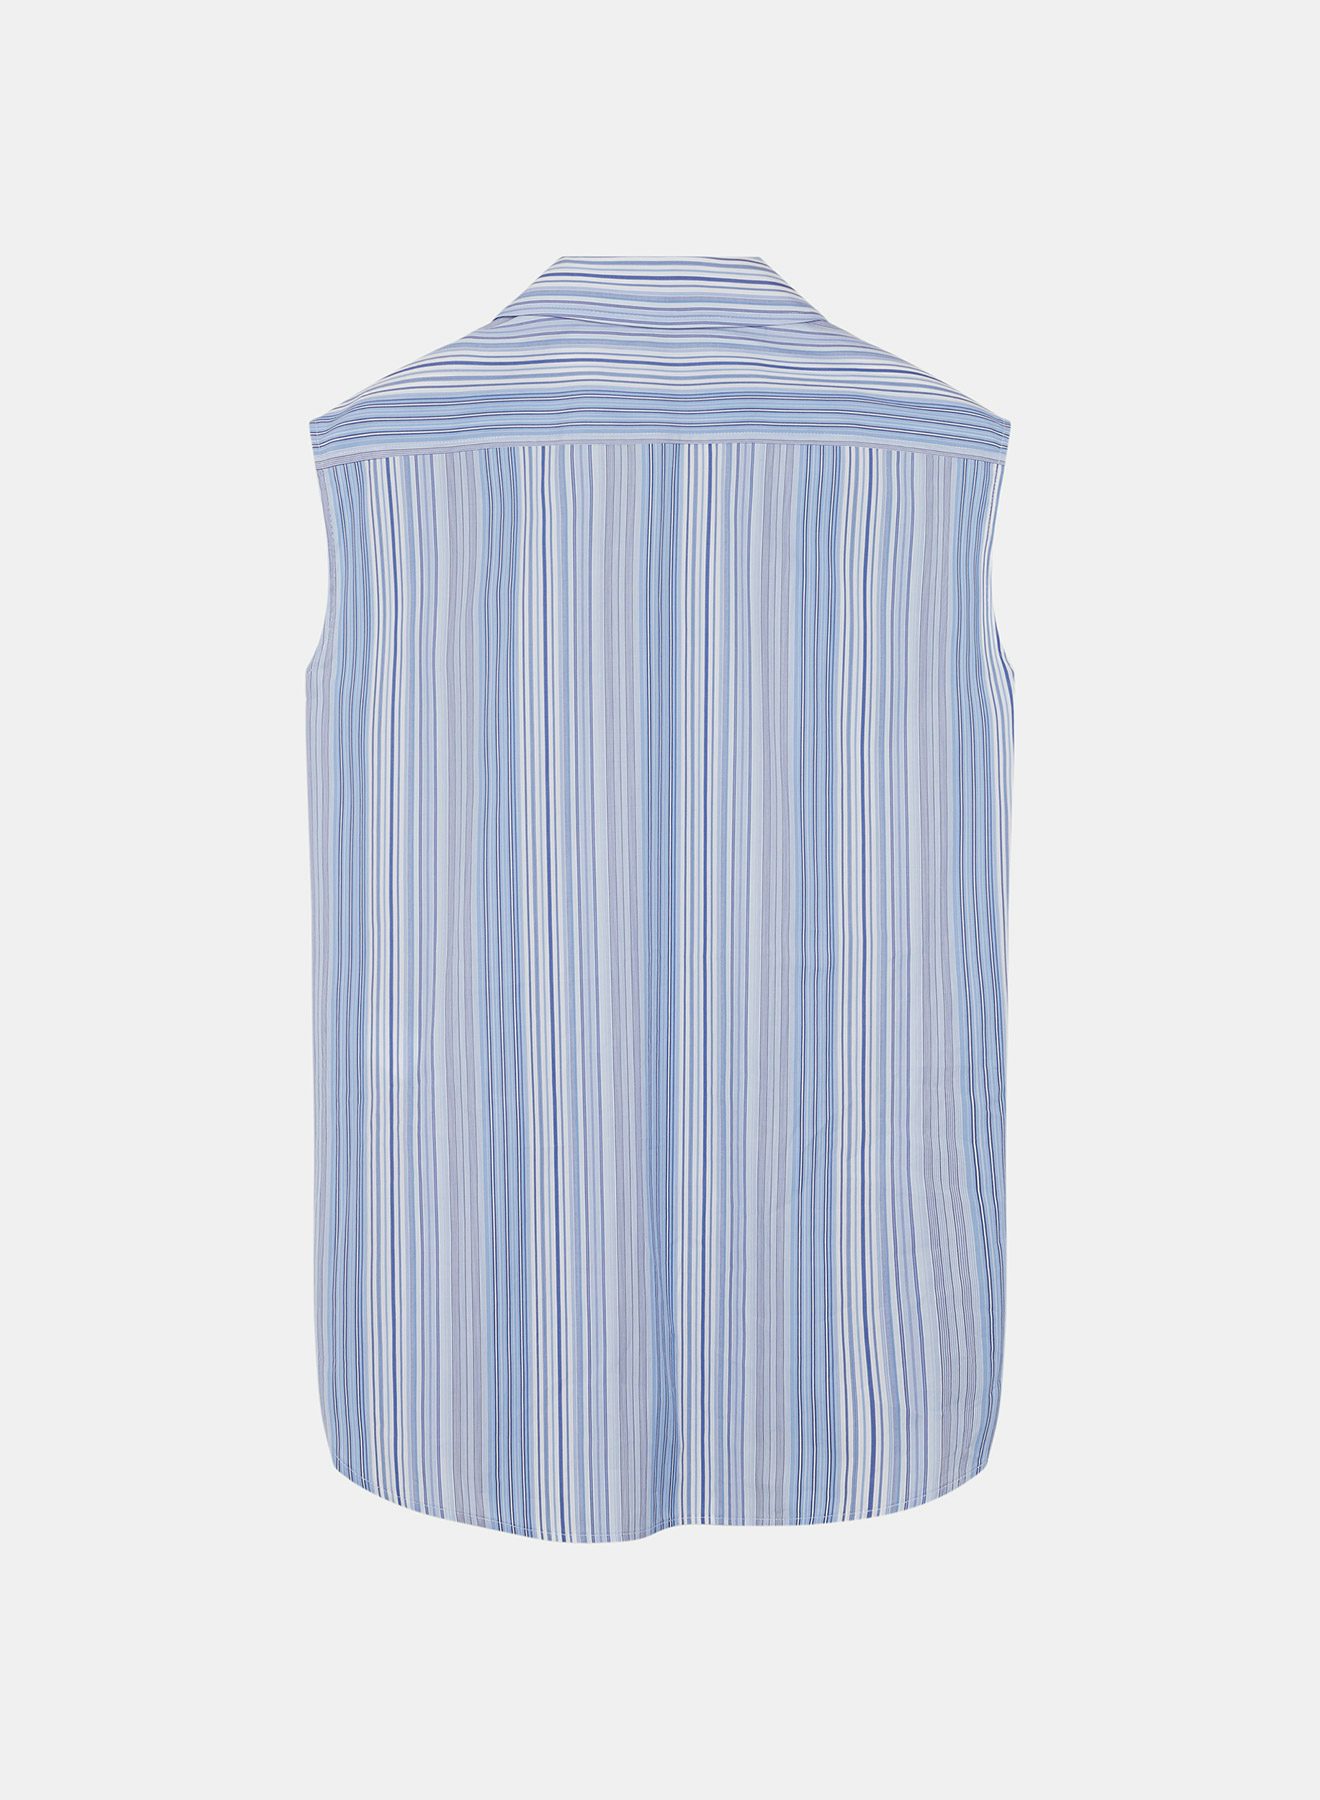 Sleeveless criss-cross blouse with blue stripes - Nina Ricci